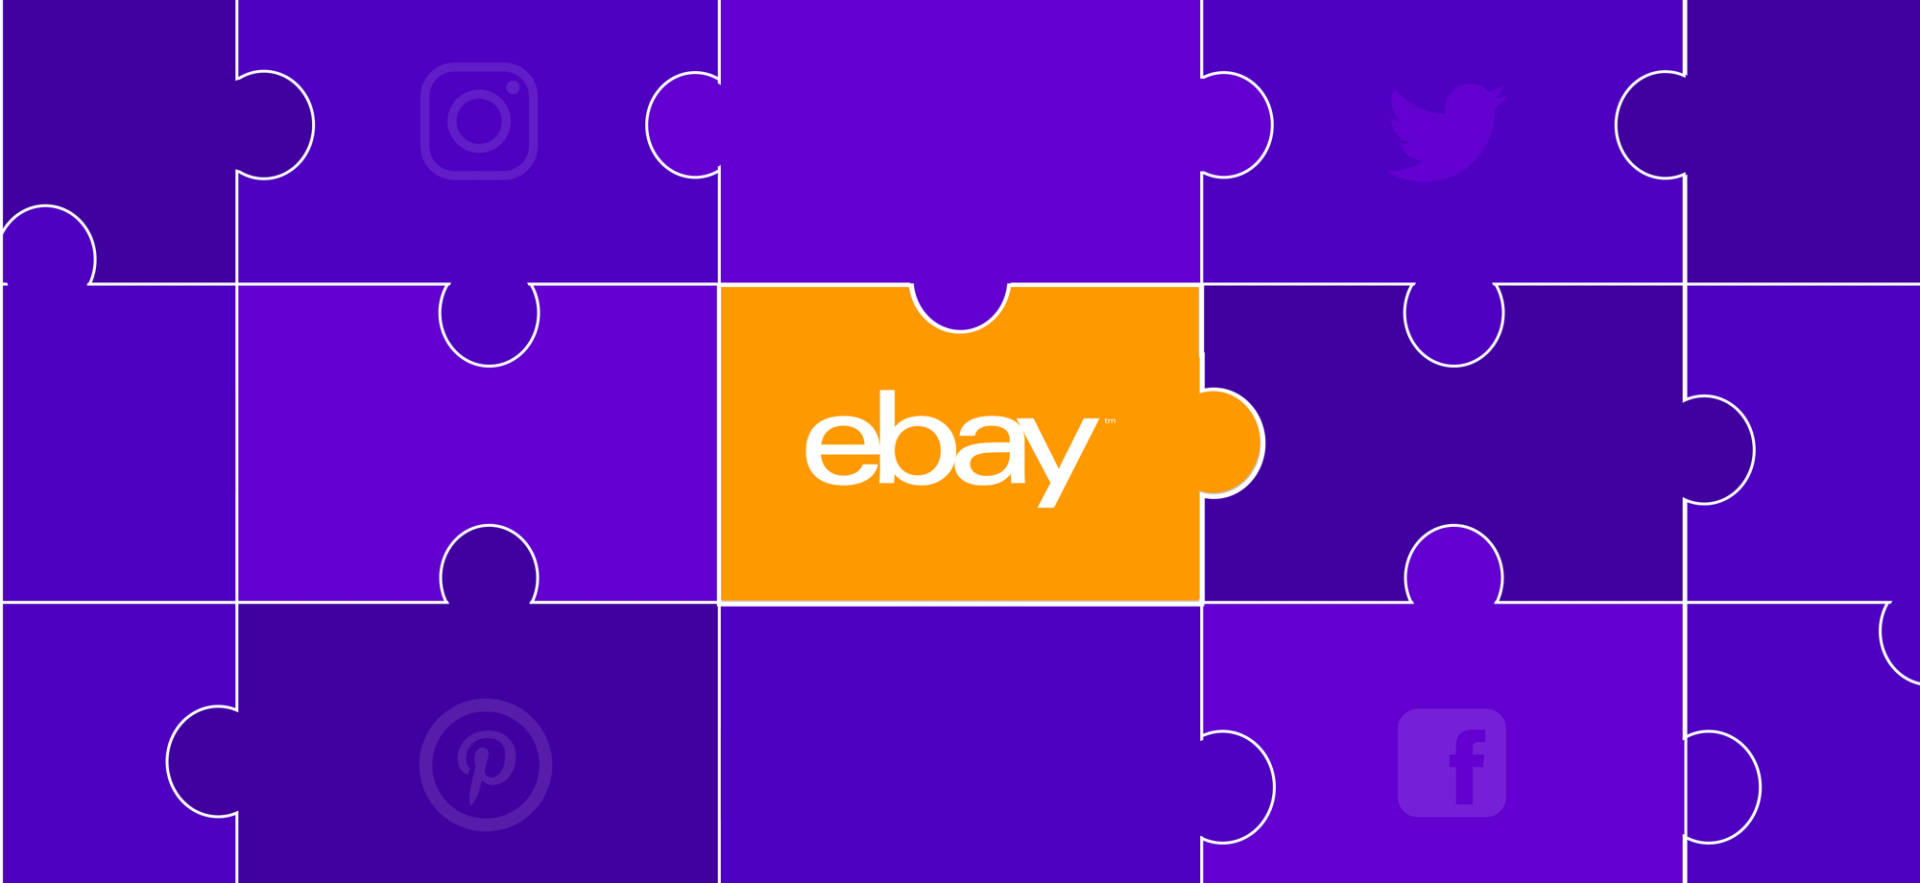 Ebay Purple Puzzle Background